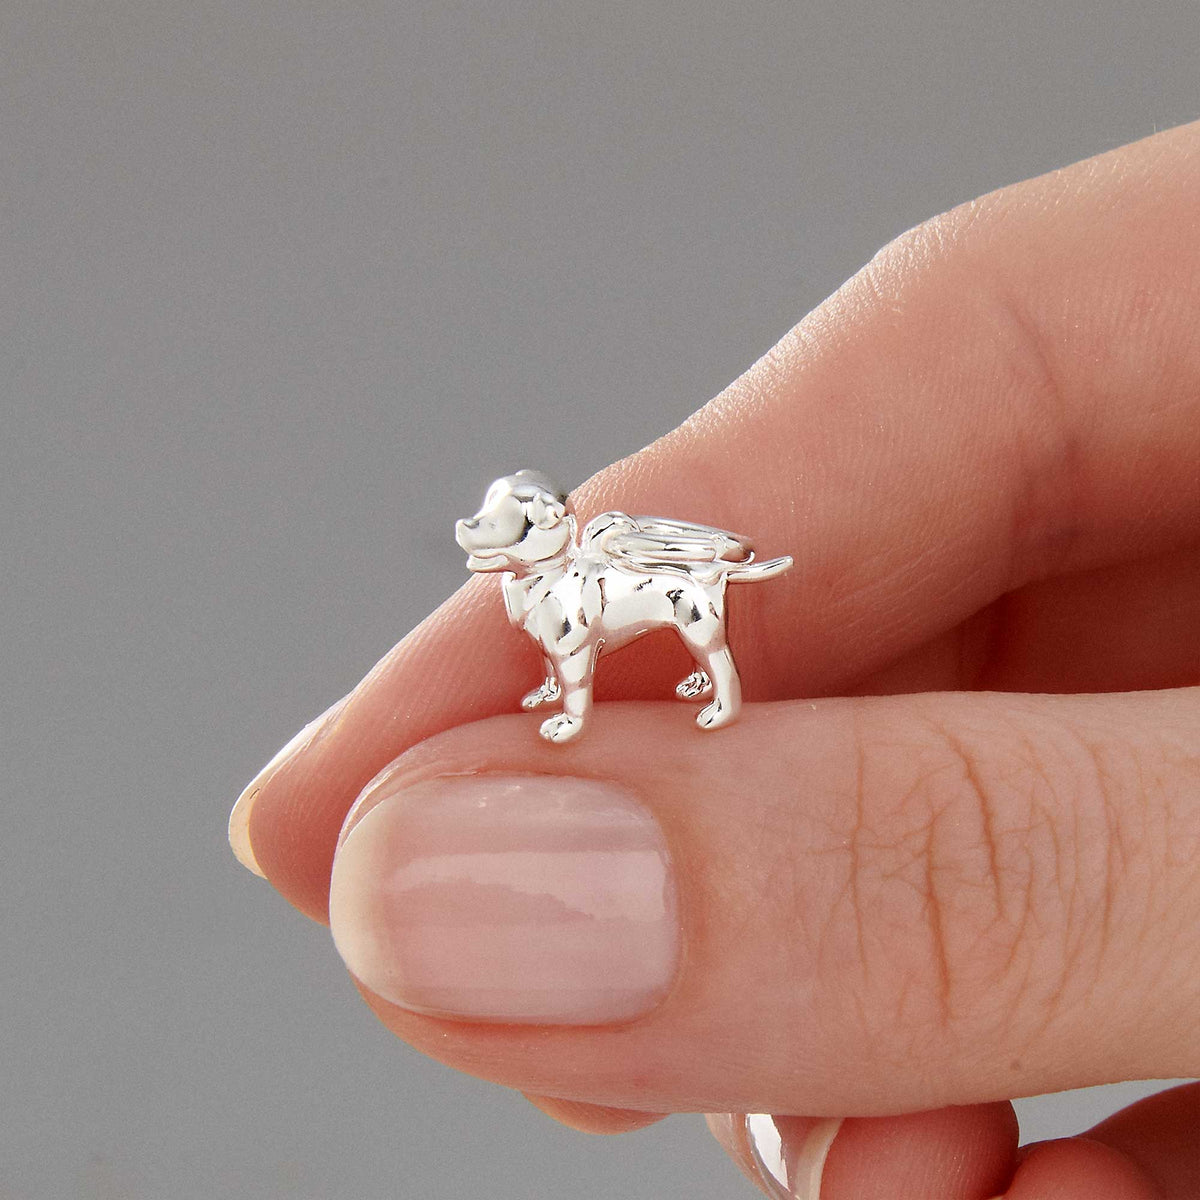 Staffordshire Bull Terrier Staffy dog breed solid sterling silver dog charm for bracelet Scarlett Jewellery Ltd